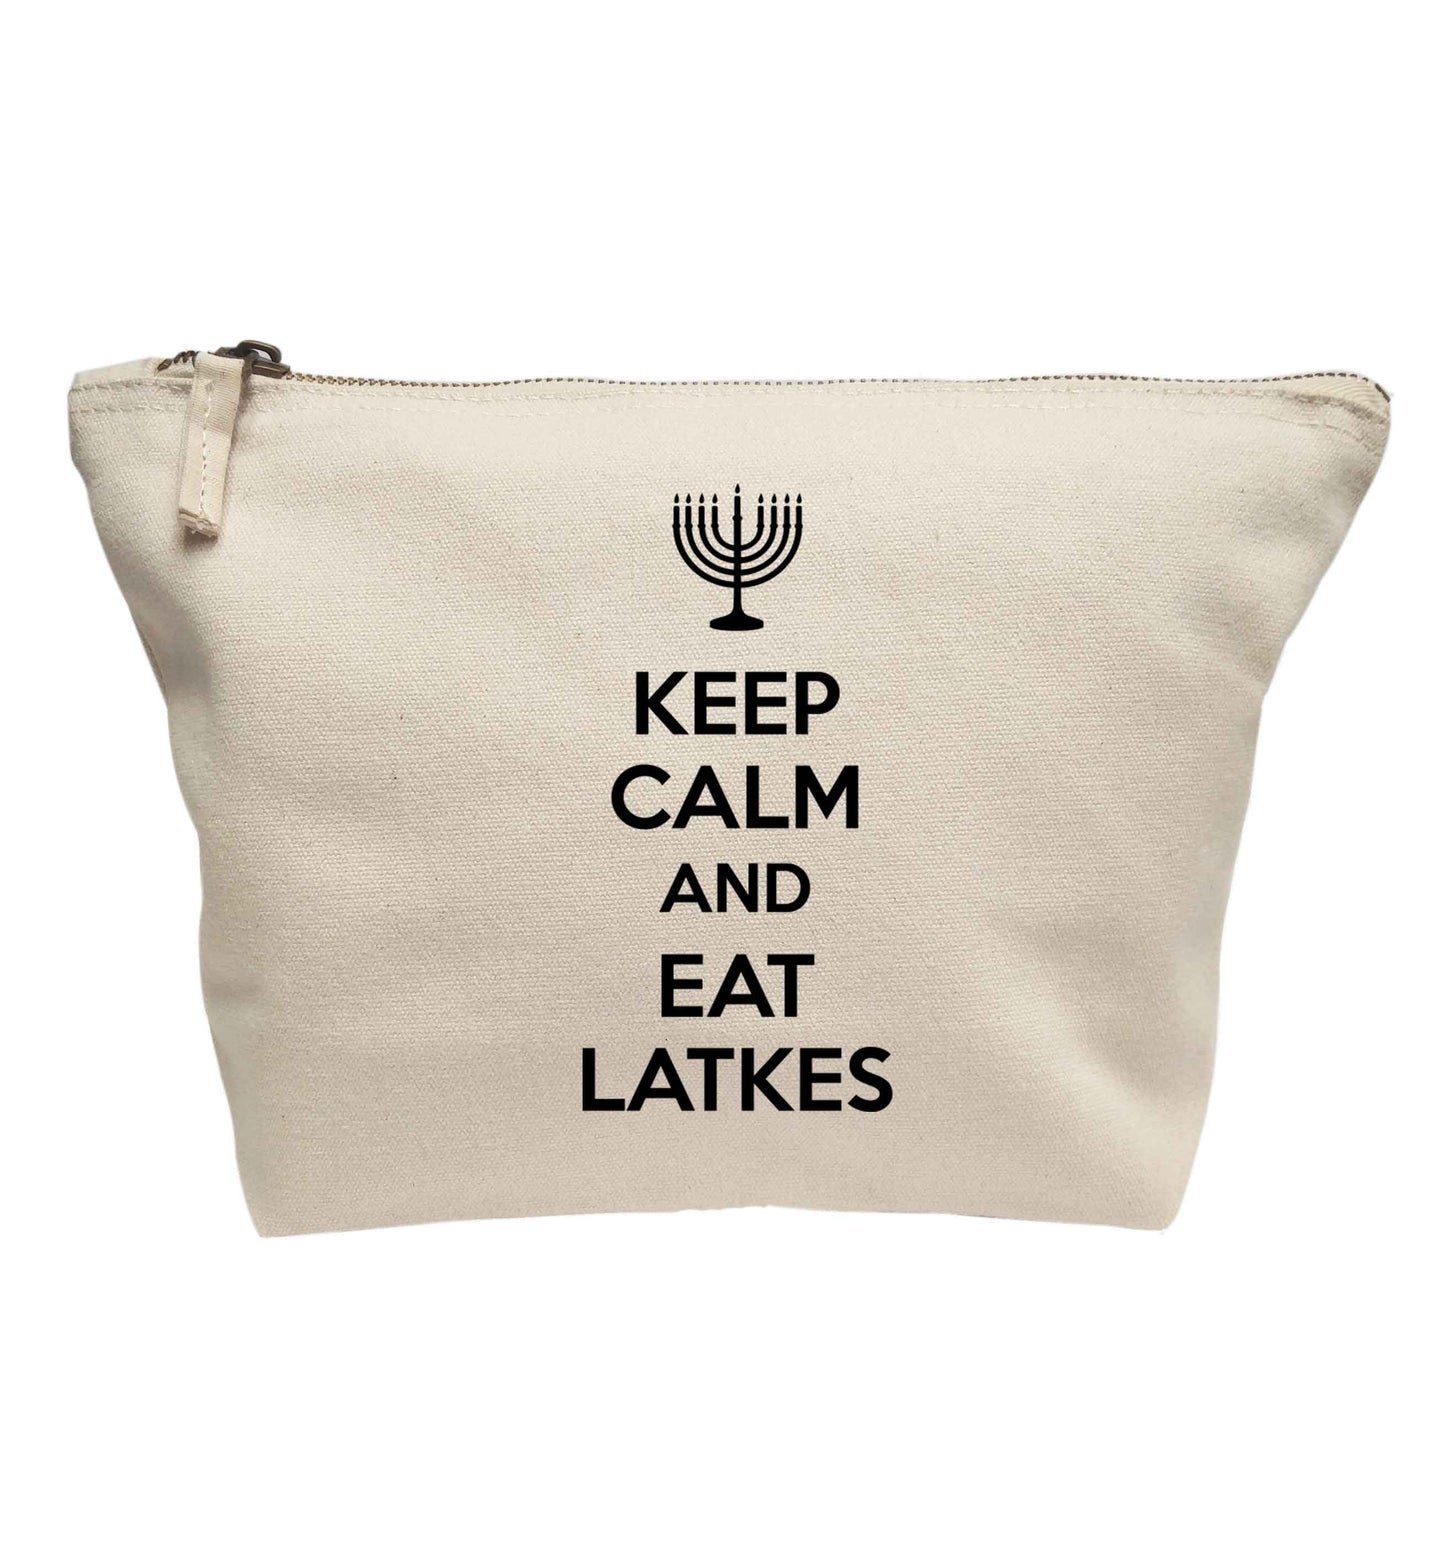 Keep calm and eat latkes | Makeup / wash bag